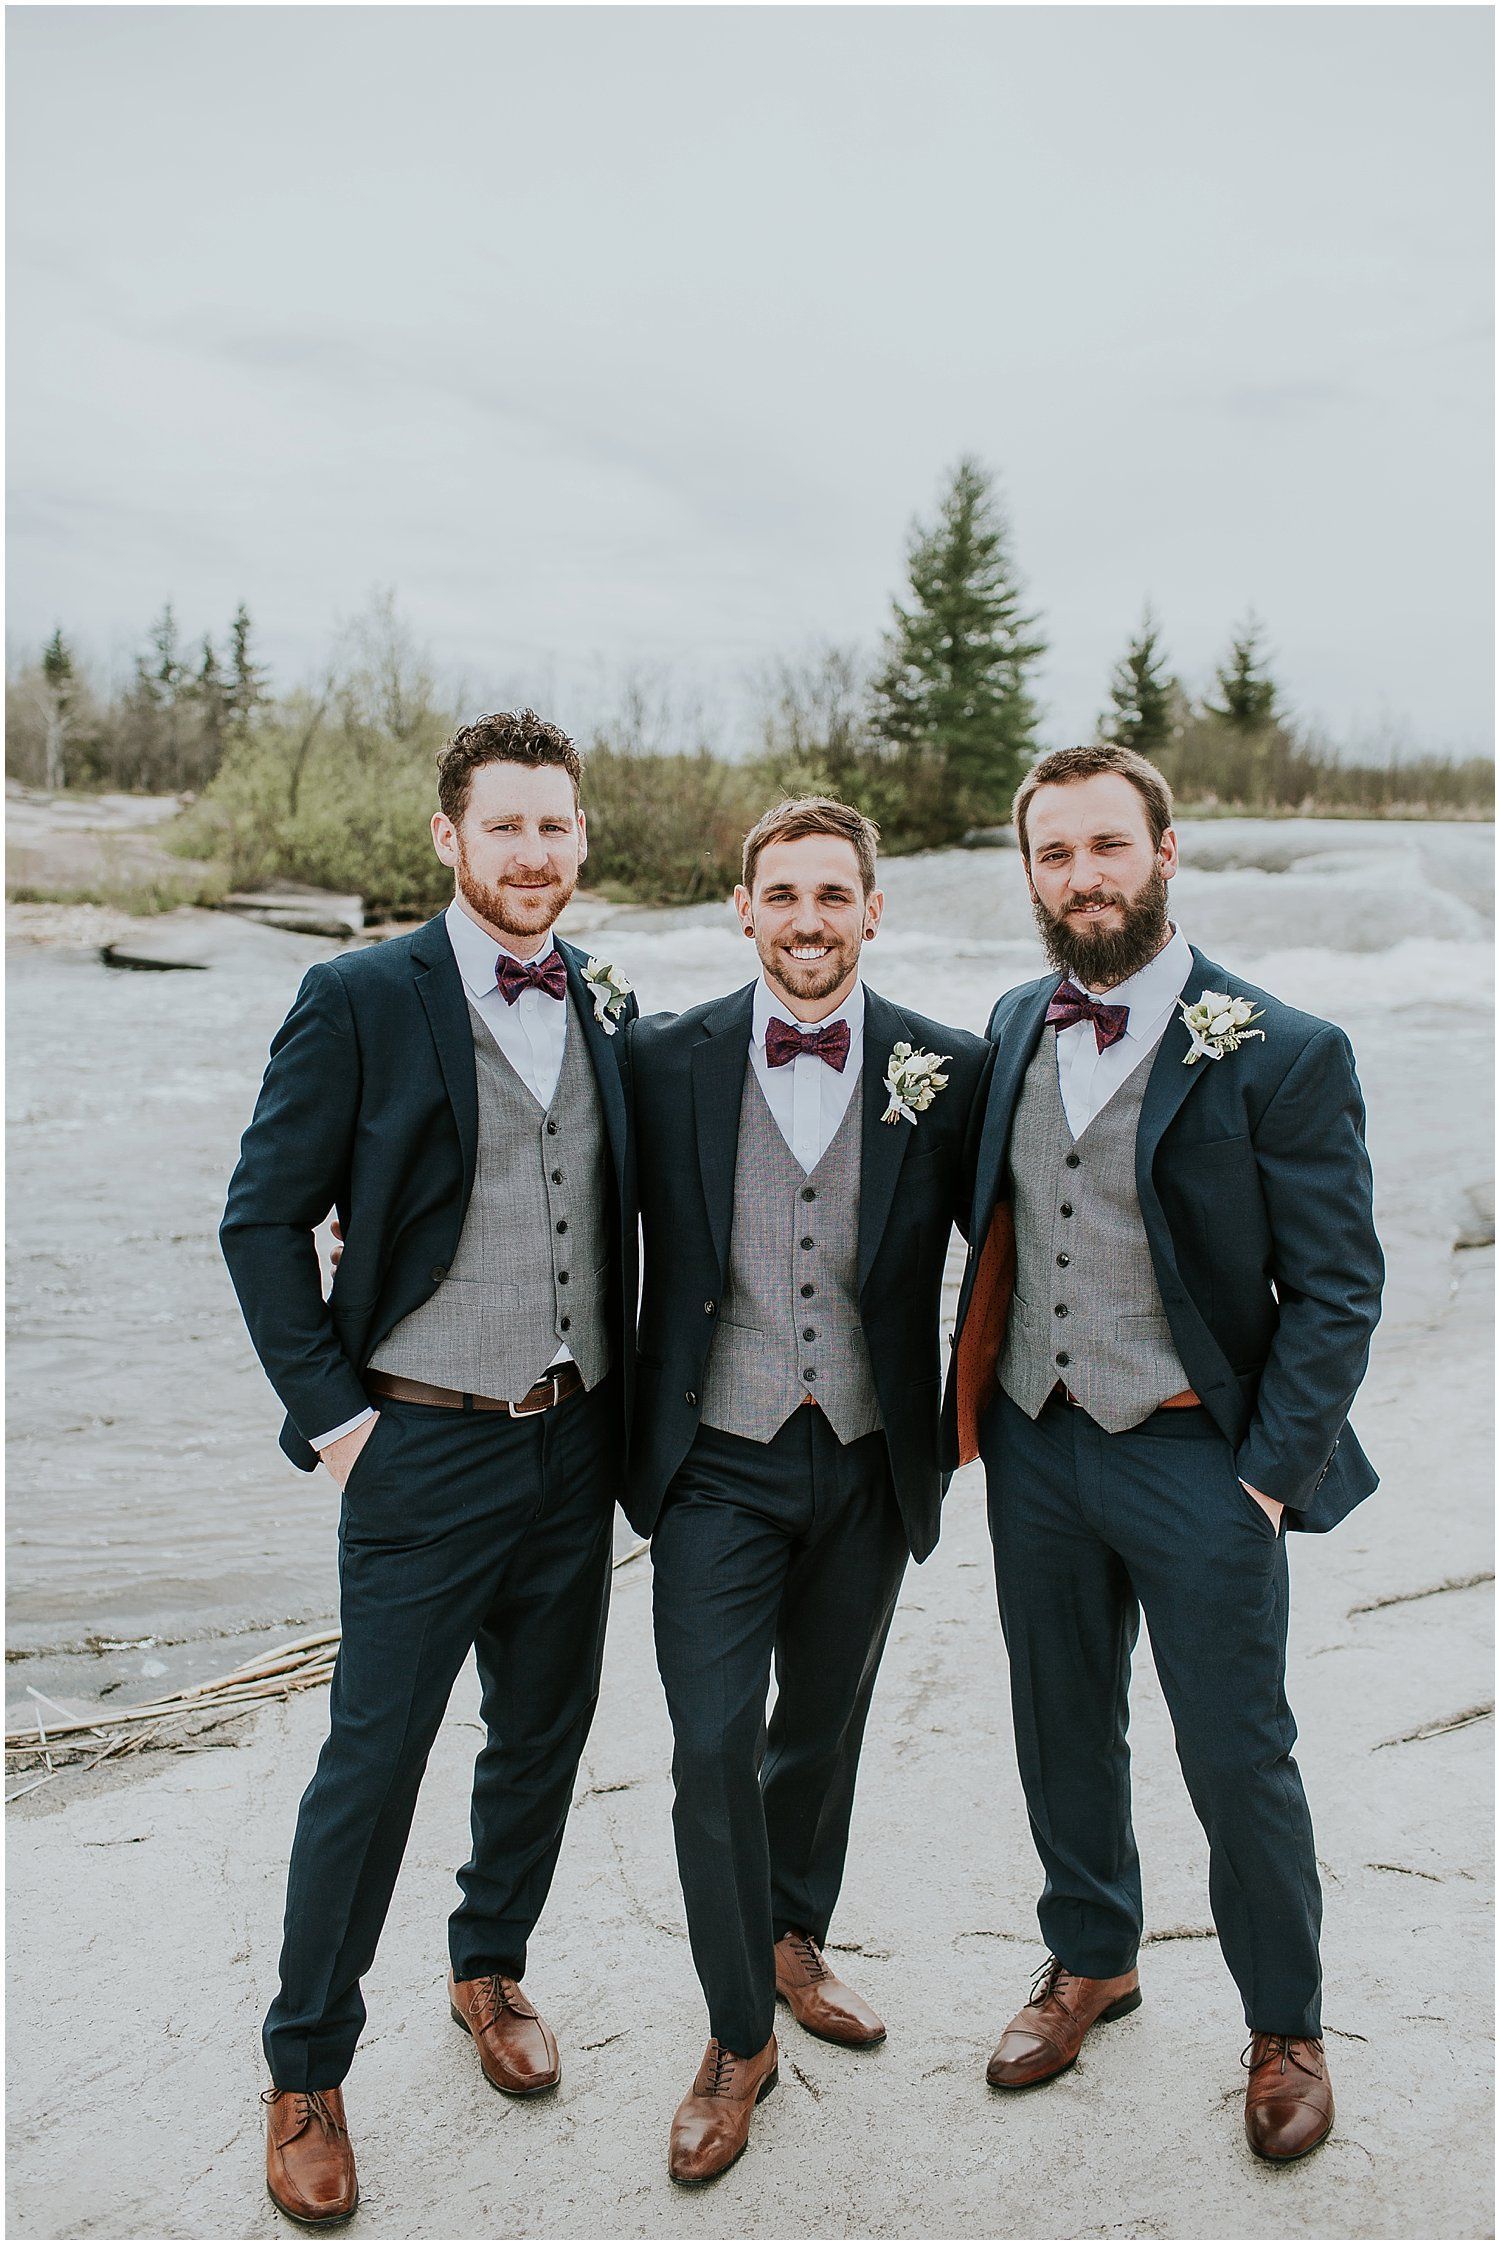 Joel + Amanda | Cabin Wedding by the Lake | Vancouver Photographer -   18 wedding Suits Men bohemian ideas